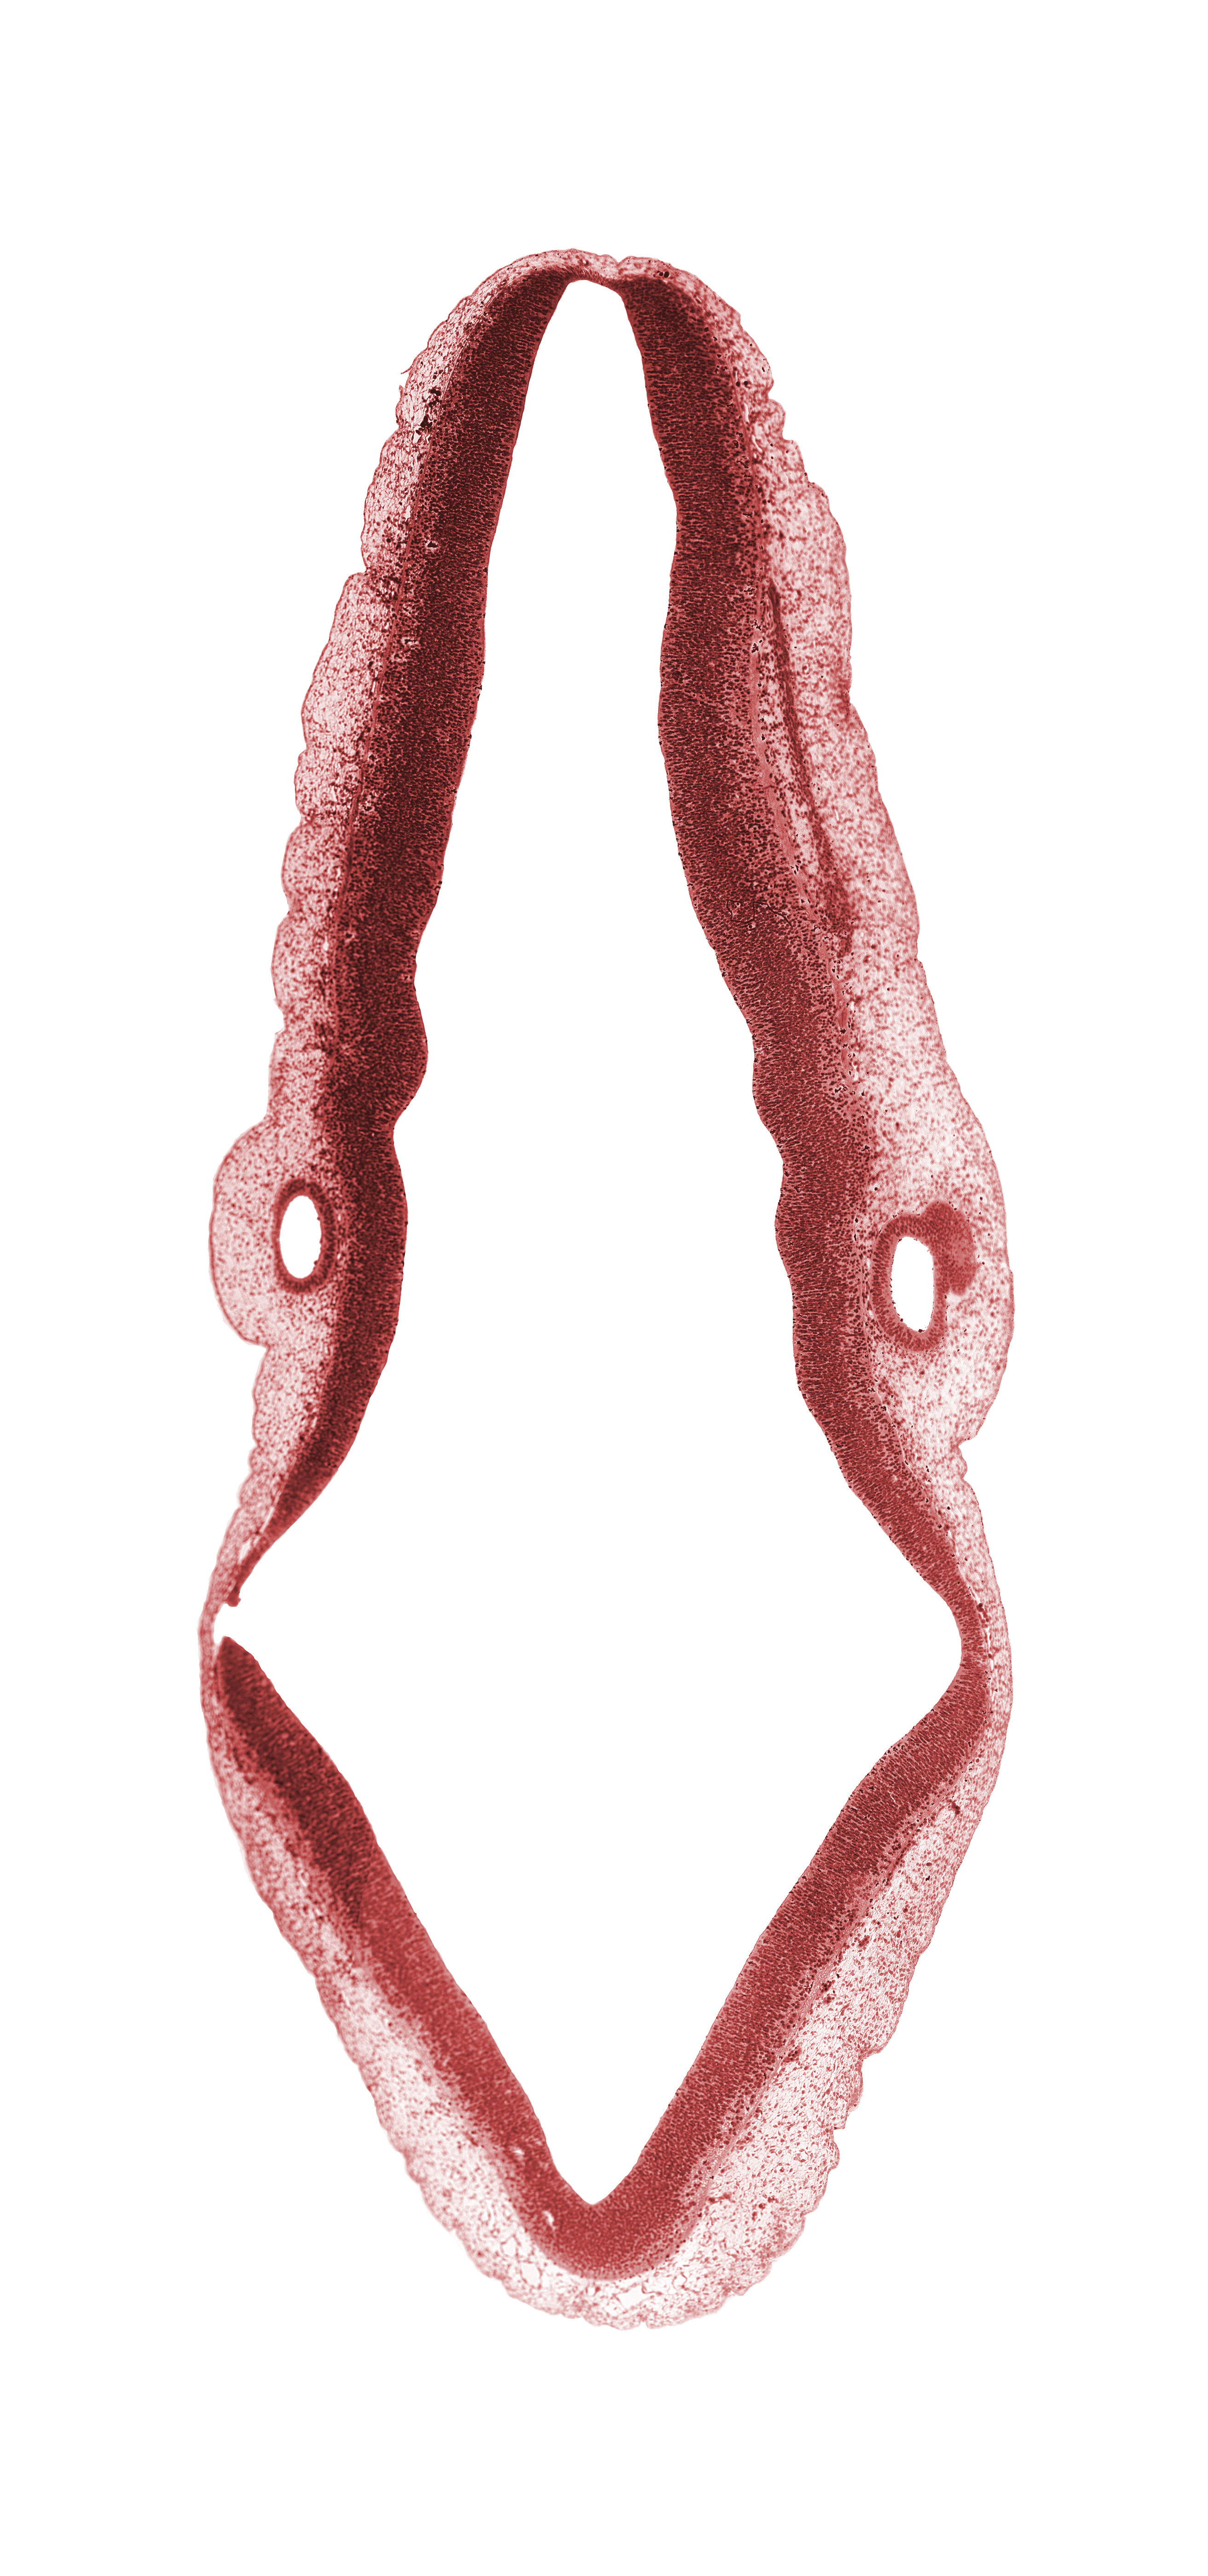 alar plate of metencephalon (primordium of cerebellum), alar plate(s), basal plate, caudal part of myelencephalon (rhombomere D), cephalic edge of superior ganglion of vagus nerve (CN X), cephalic edge of vestibular part of otic vesicle, endolymphatic duct part of otic vesicle, isthmus of rhombencephalon, junction of accessory and vagus nerves (CN XI and CN X), rhombencoel (fourth ventricle), rhombomere 6, rhombomere 7, roof plate, spinal accessory nerve (CN XI), sulcus limitans, surface ectoderm, transverse rhombencephalic sulcus